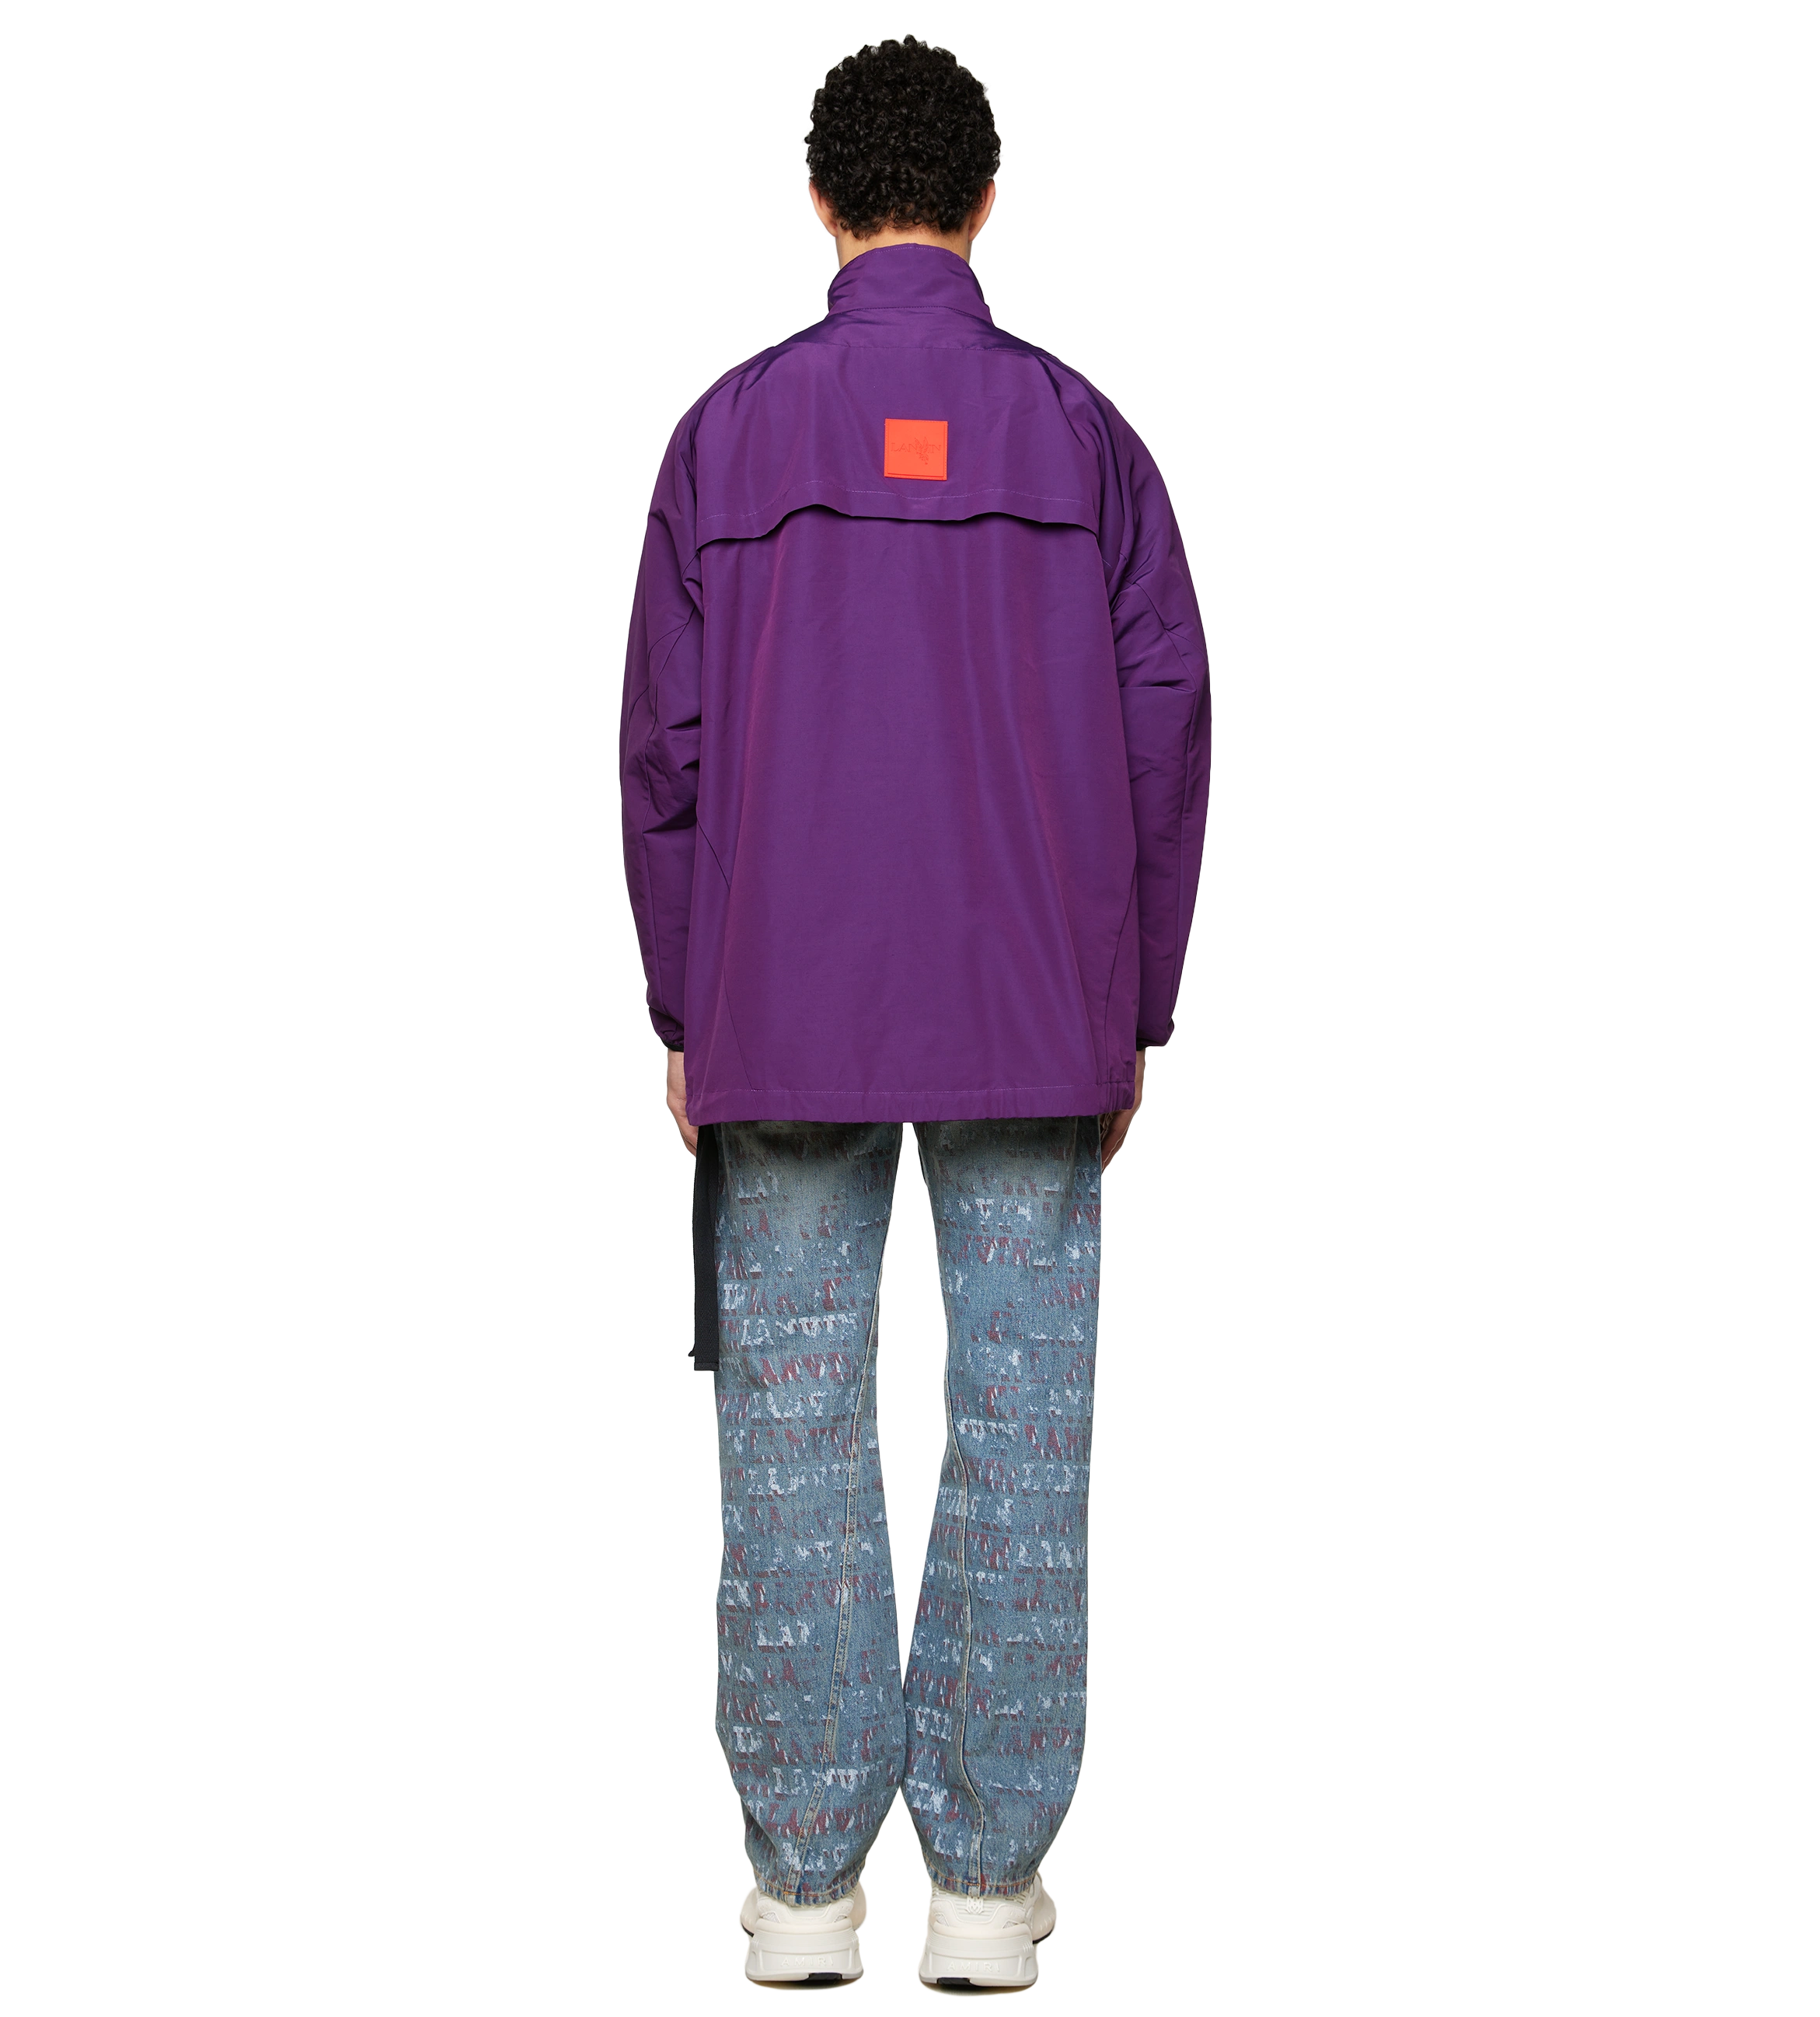 Lanvin x Future Zipped Jacket Purple